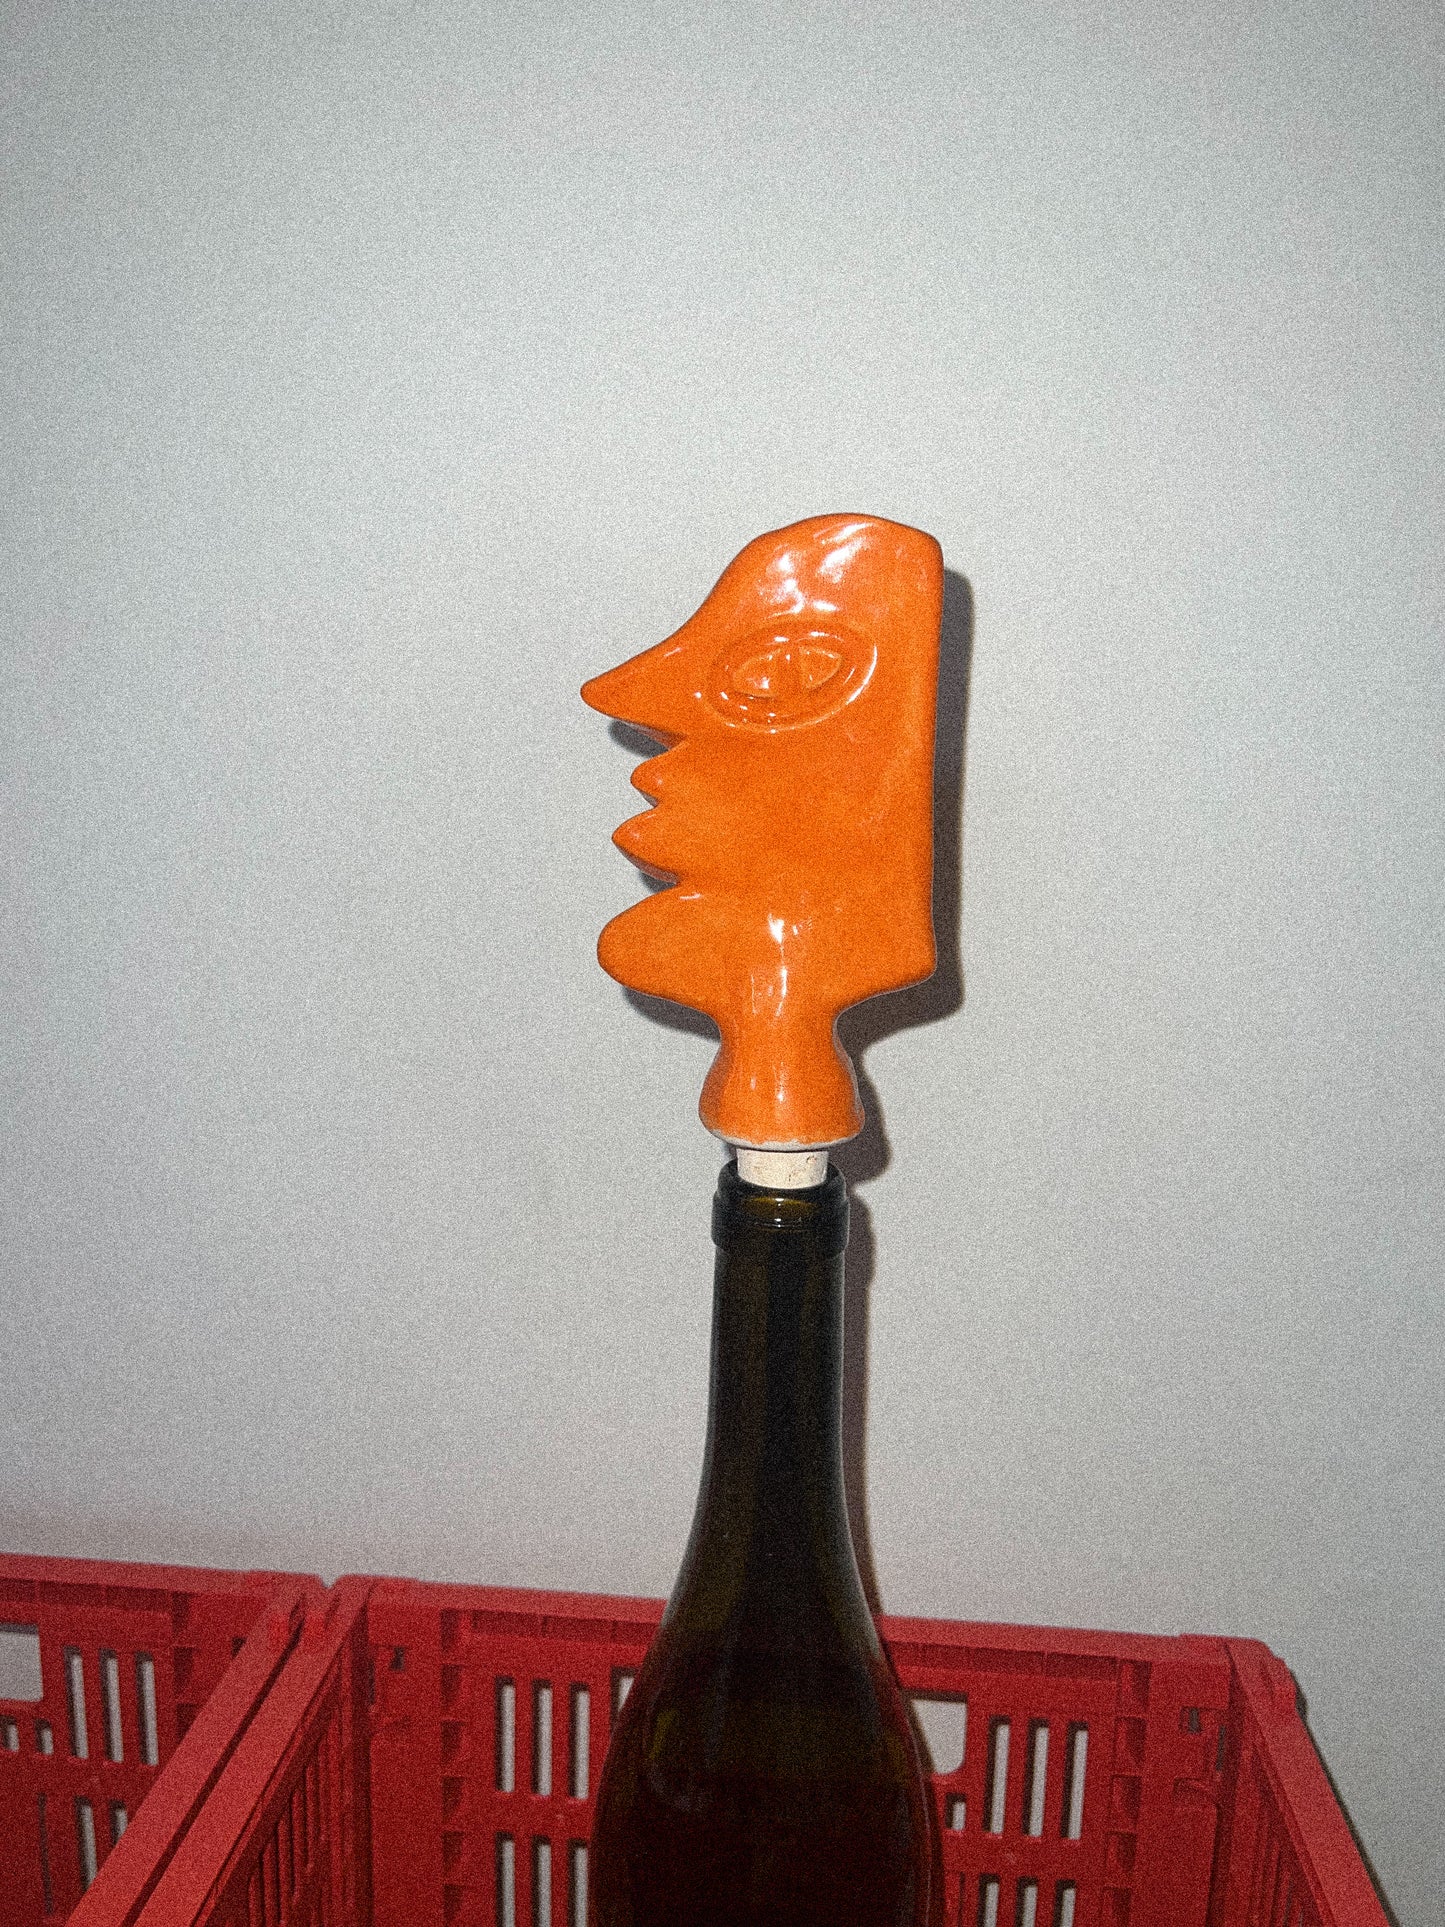 Orange winestopper